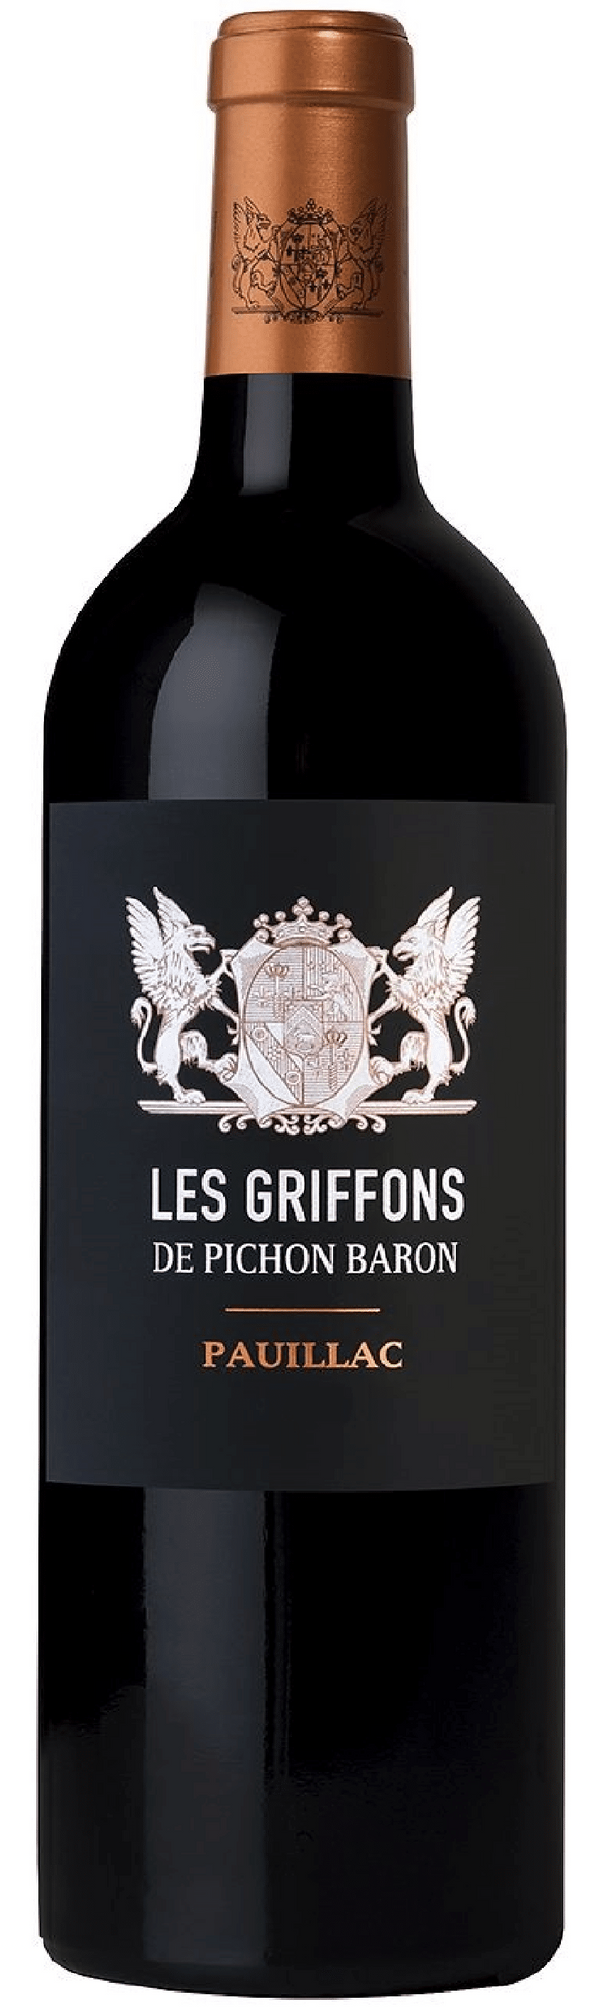 Les Griffons de Pichon-Baron Pauillac 2018 750ml